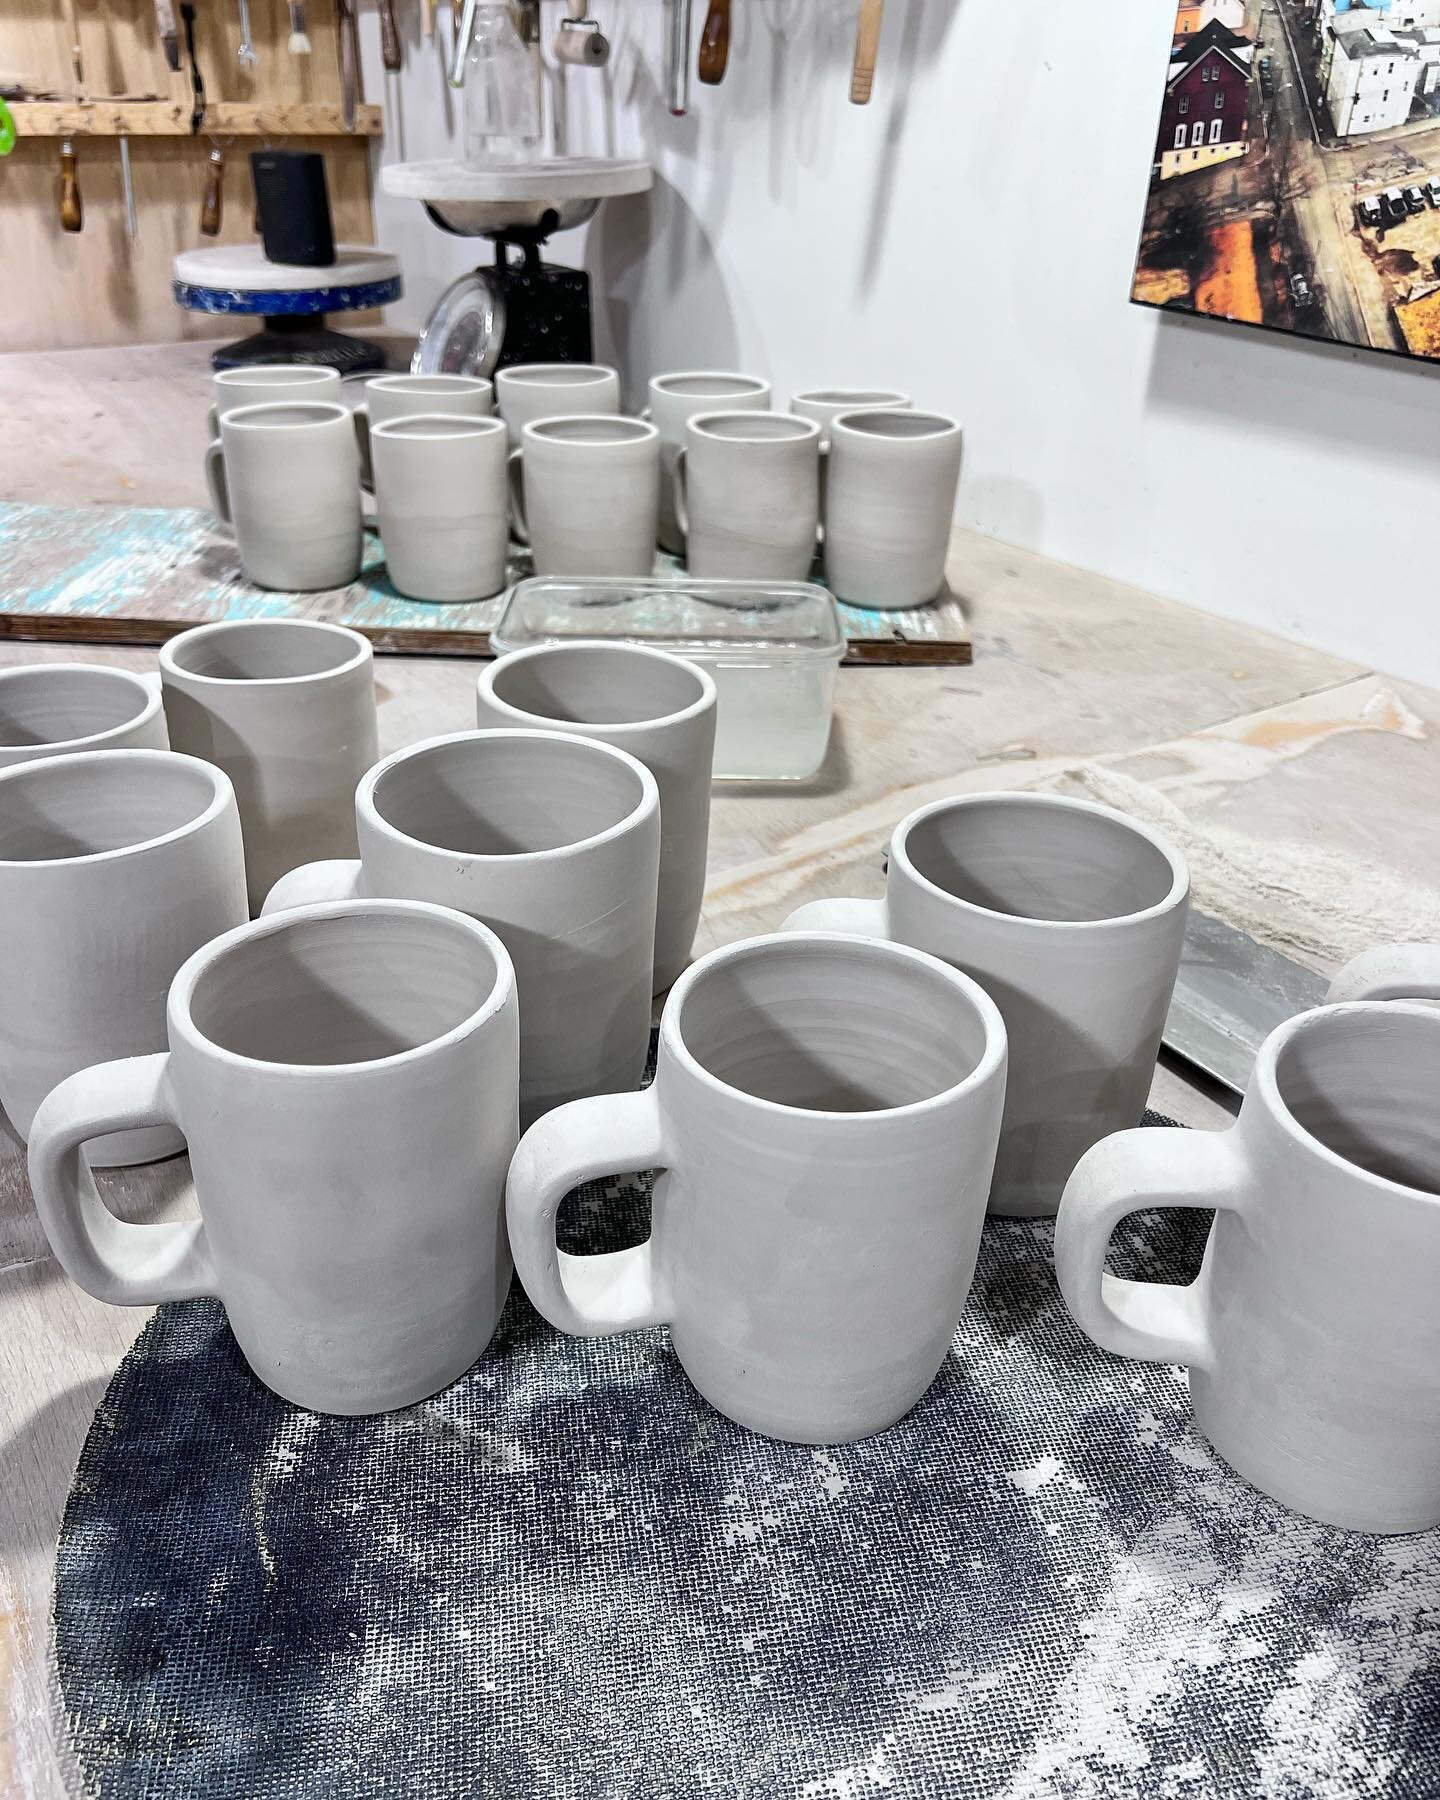 Locally made mugs - a comin&rsquo; 

#glaze #makingglazes 
#trimmingpottery #playdough 
#localboychopswood 
#localclay #woodfired #woodfiredpottery #woodfiredkiln #darrenemenau #canadianceramics #ceramics #pottery #abstract #object #contemporaryceram